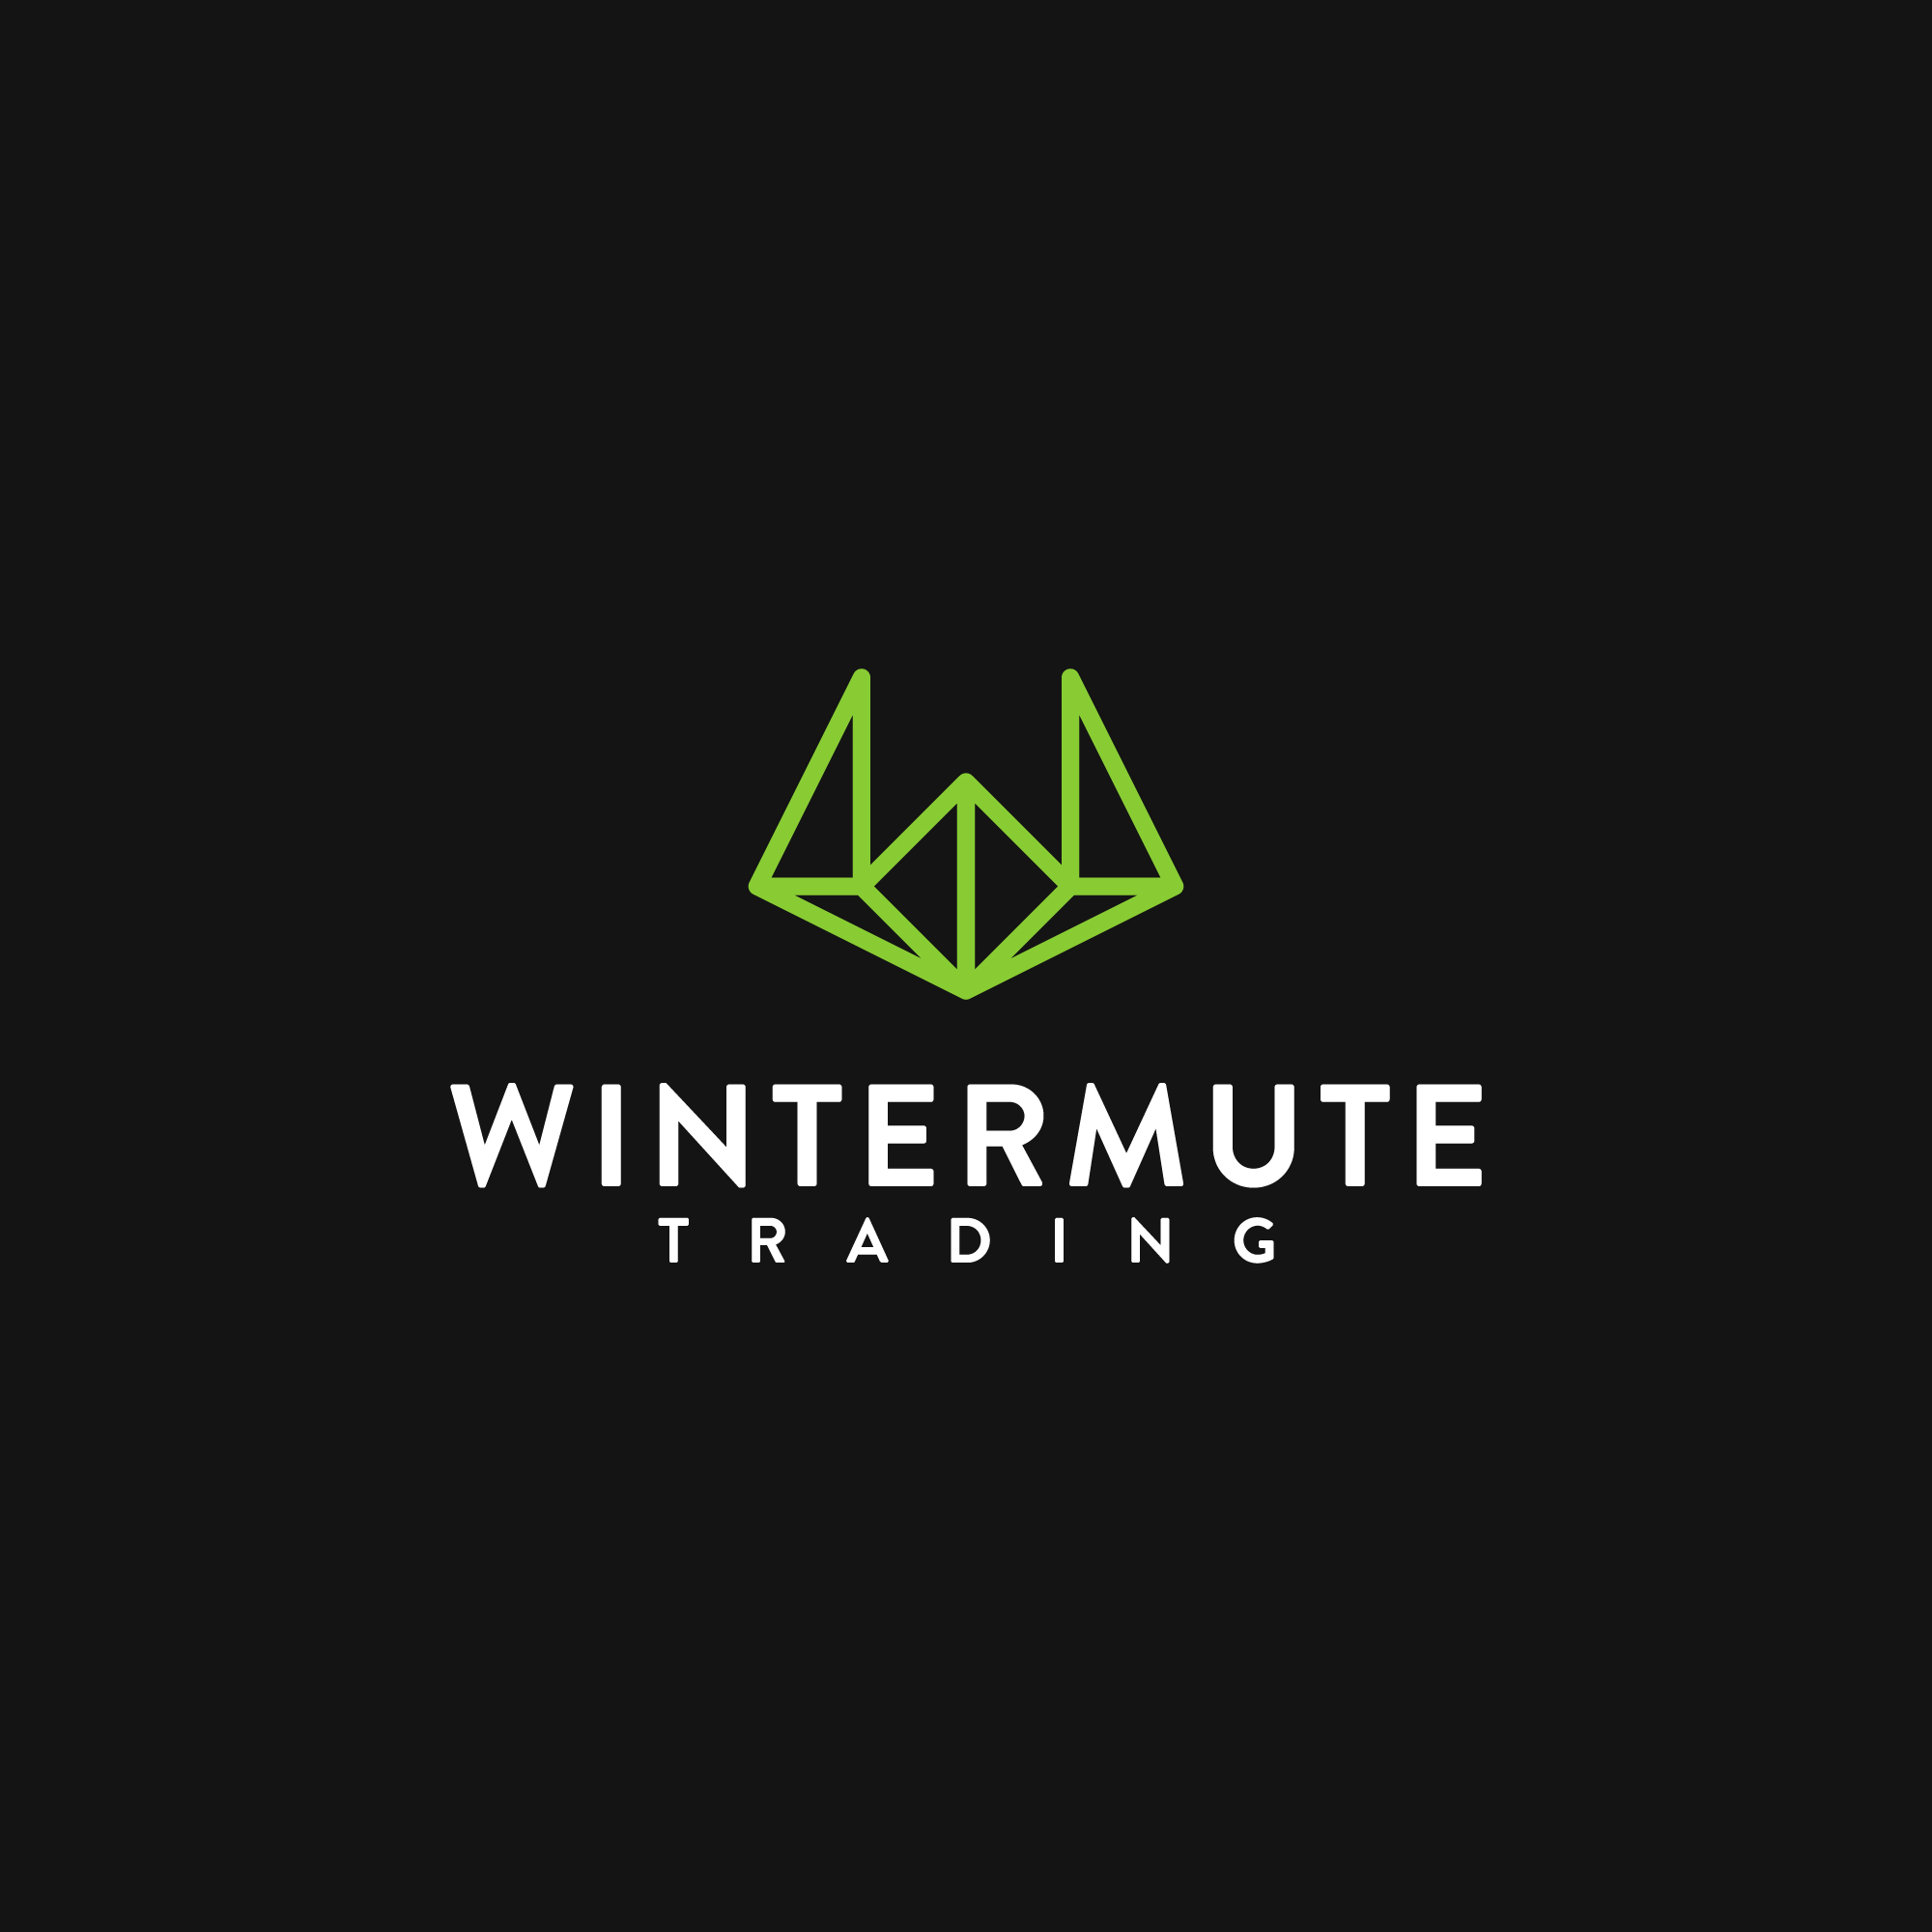 Wintermute Trading